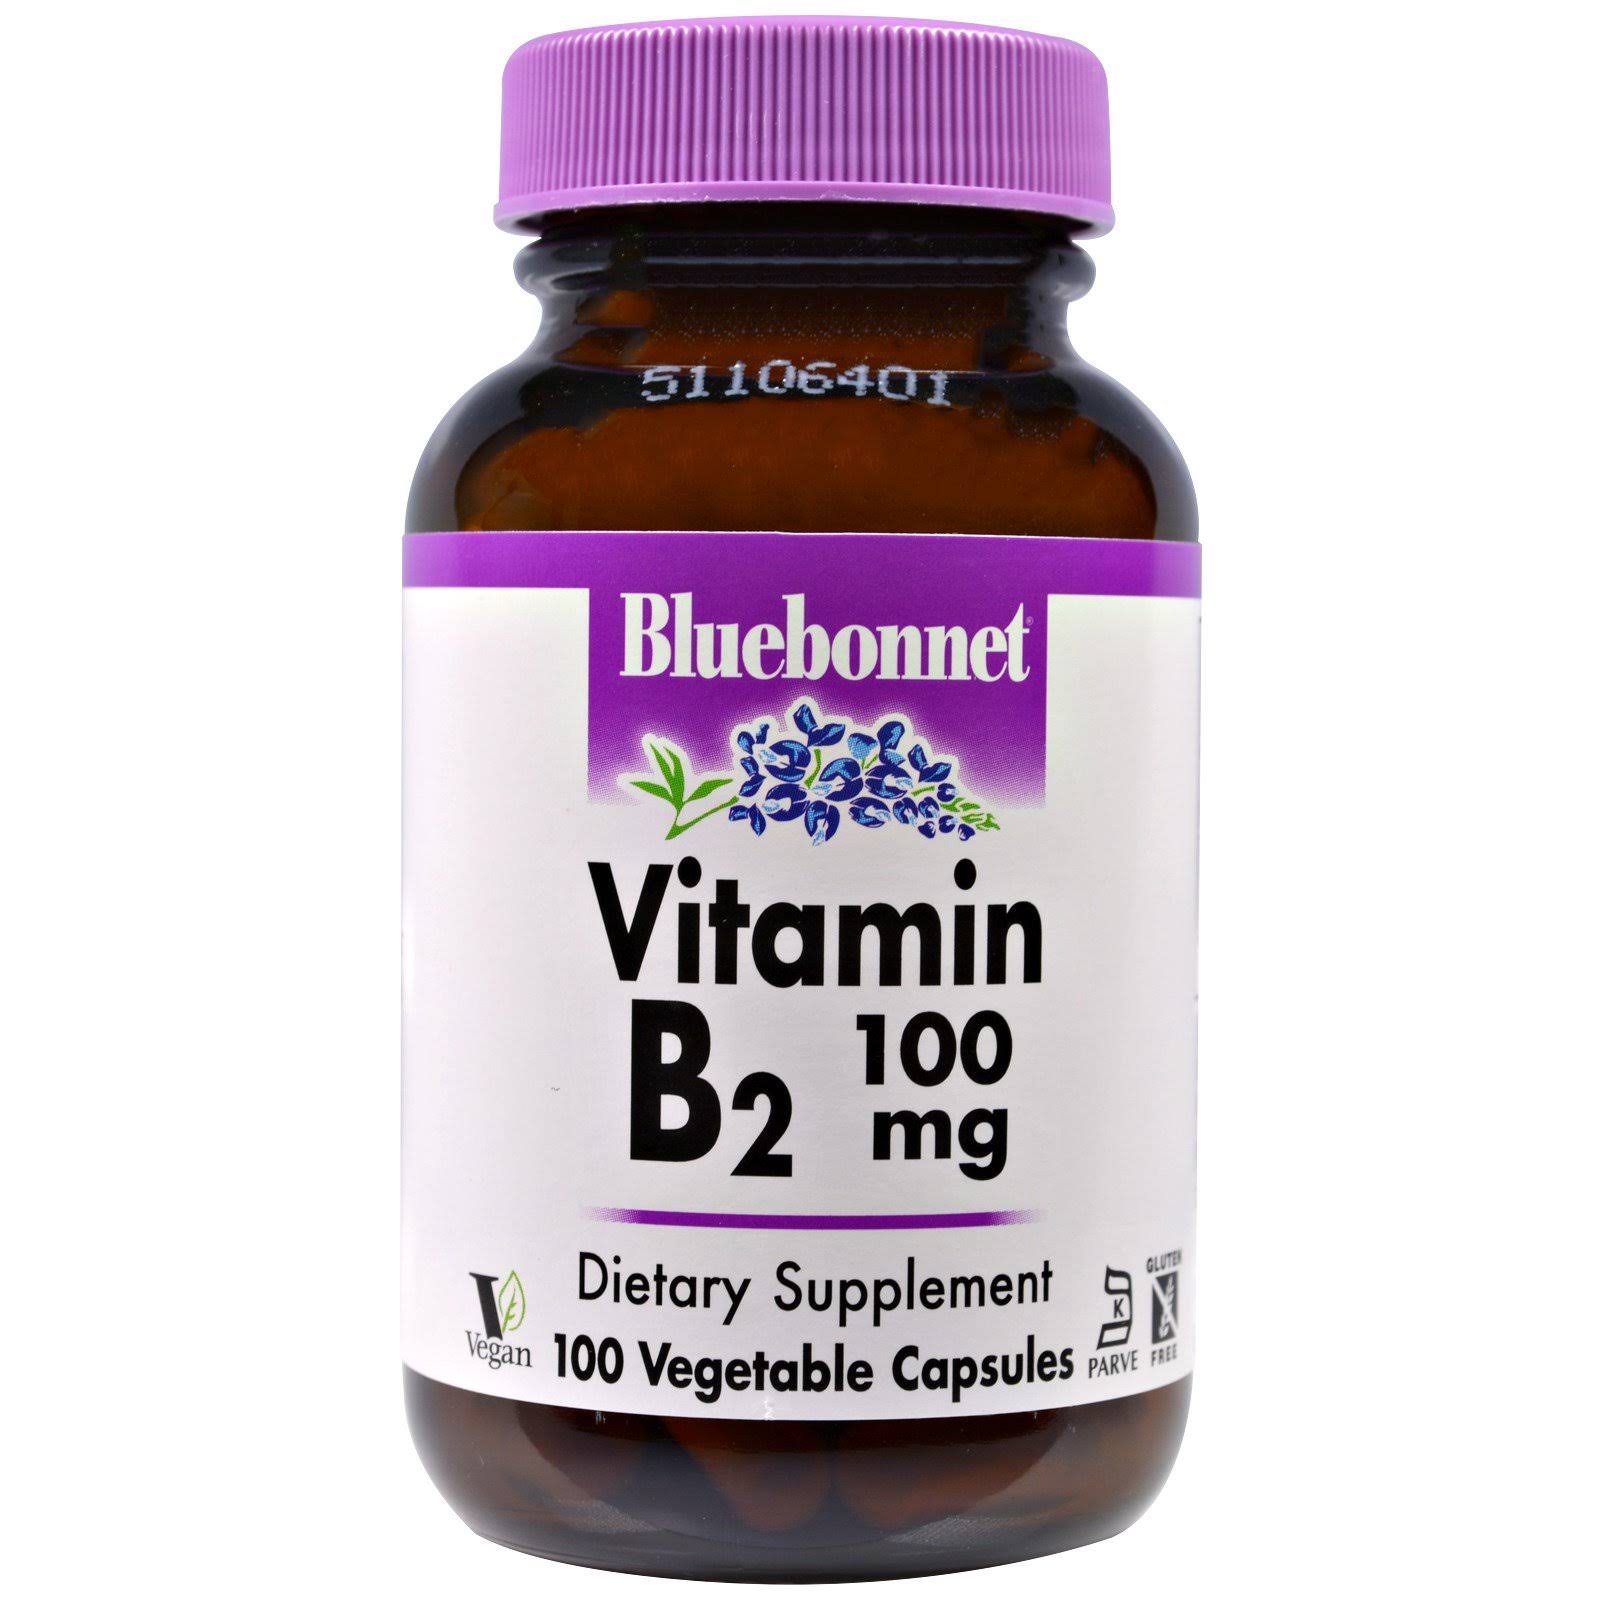 Bluebonnet Nutrition - Vitamin B2 100 mg - 100 Vegetable Capsules